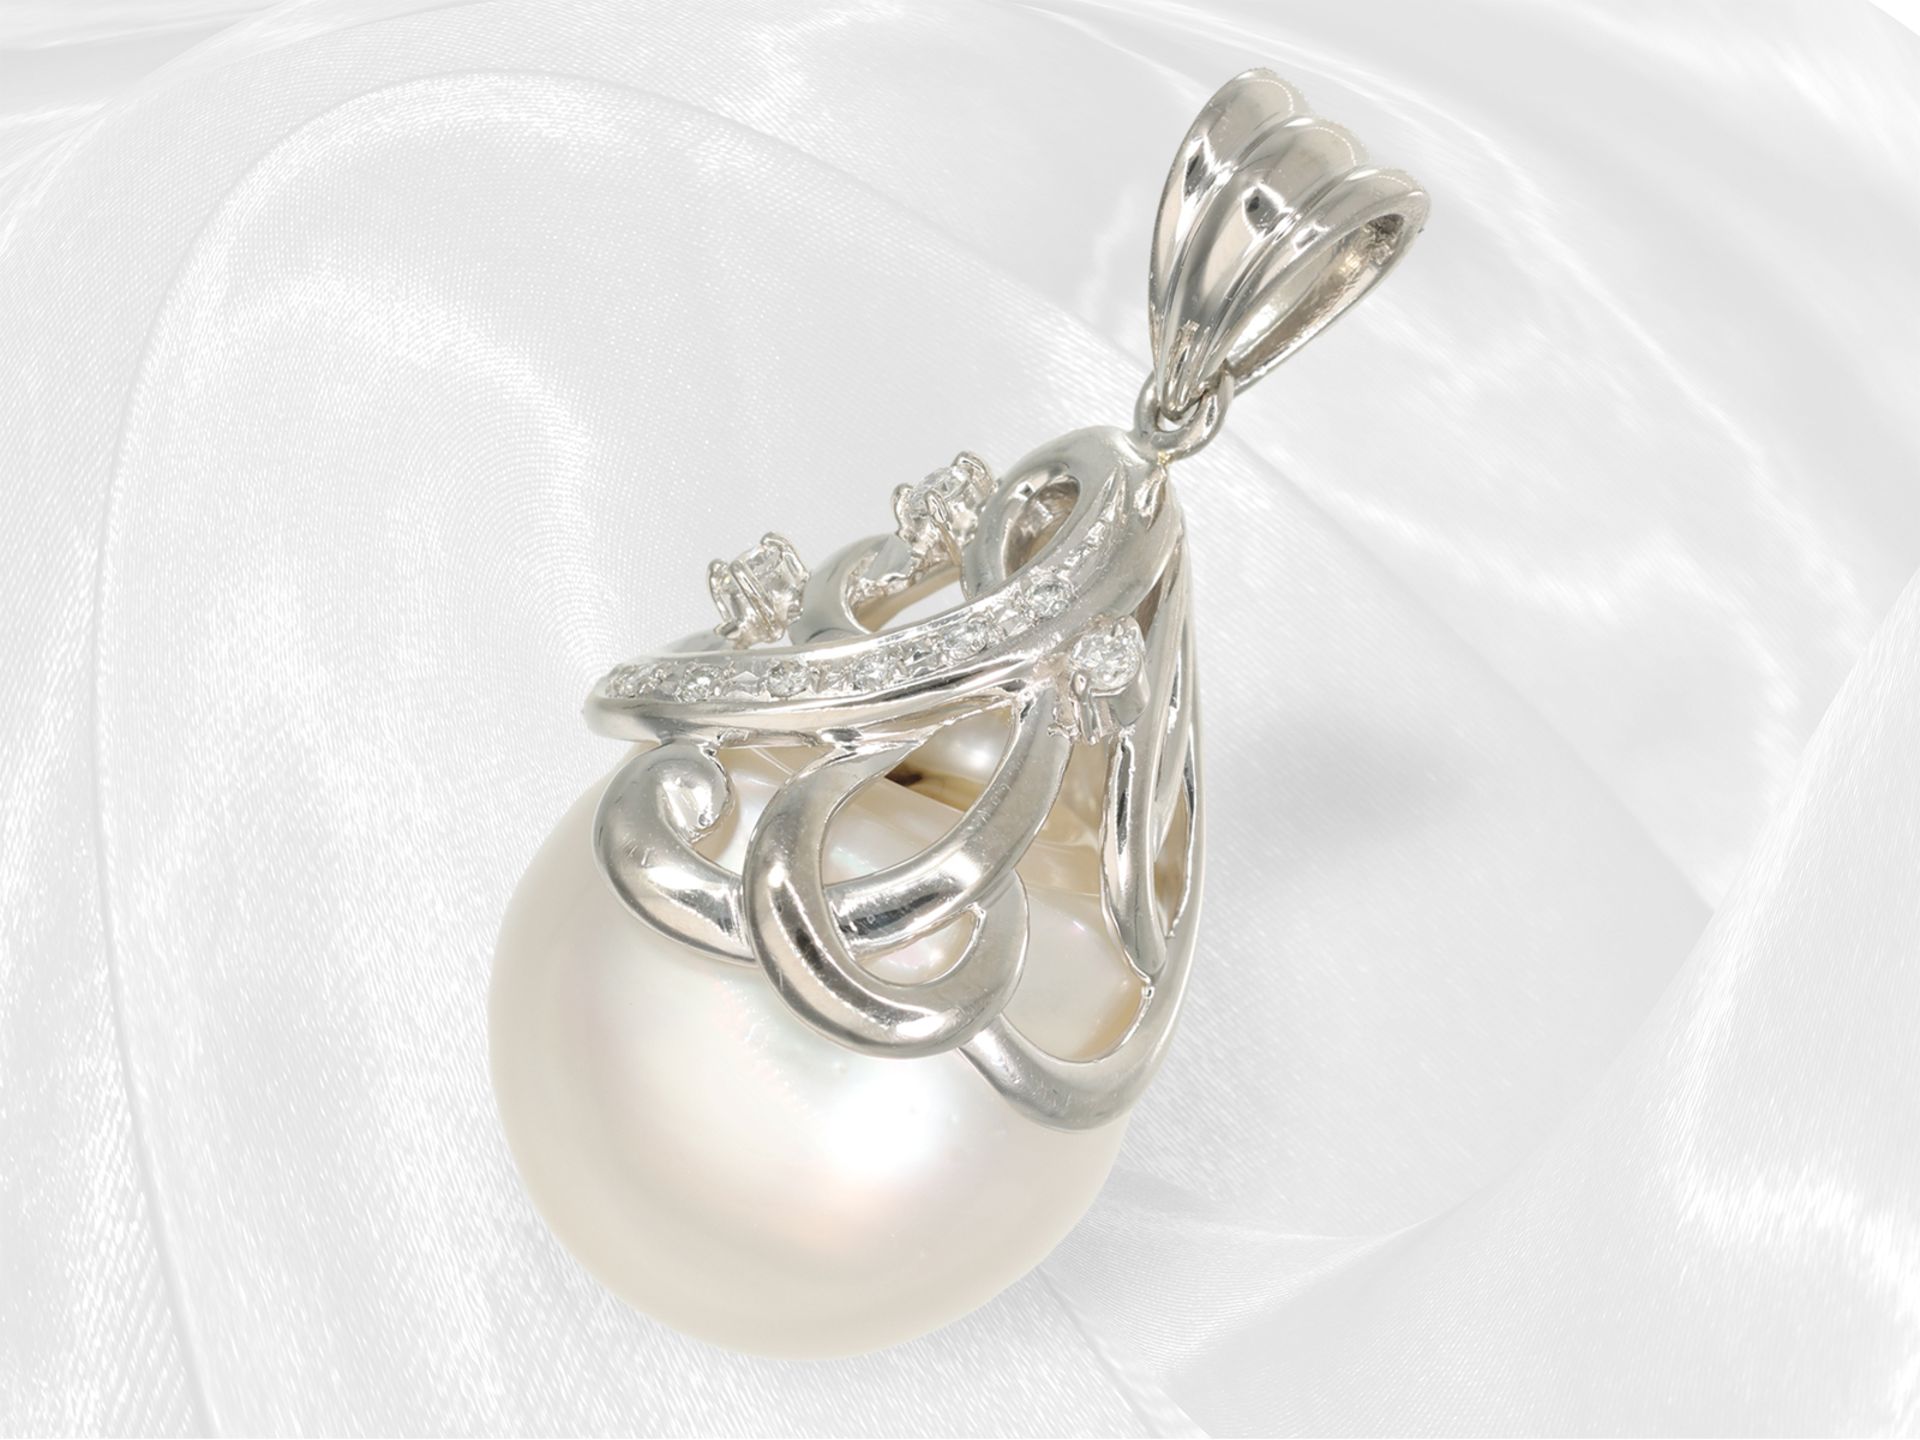 Beautiful unworn platinum South Sea pearl pendant with brilliant-cut diamonds - Image 4 of 10